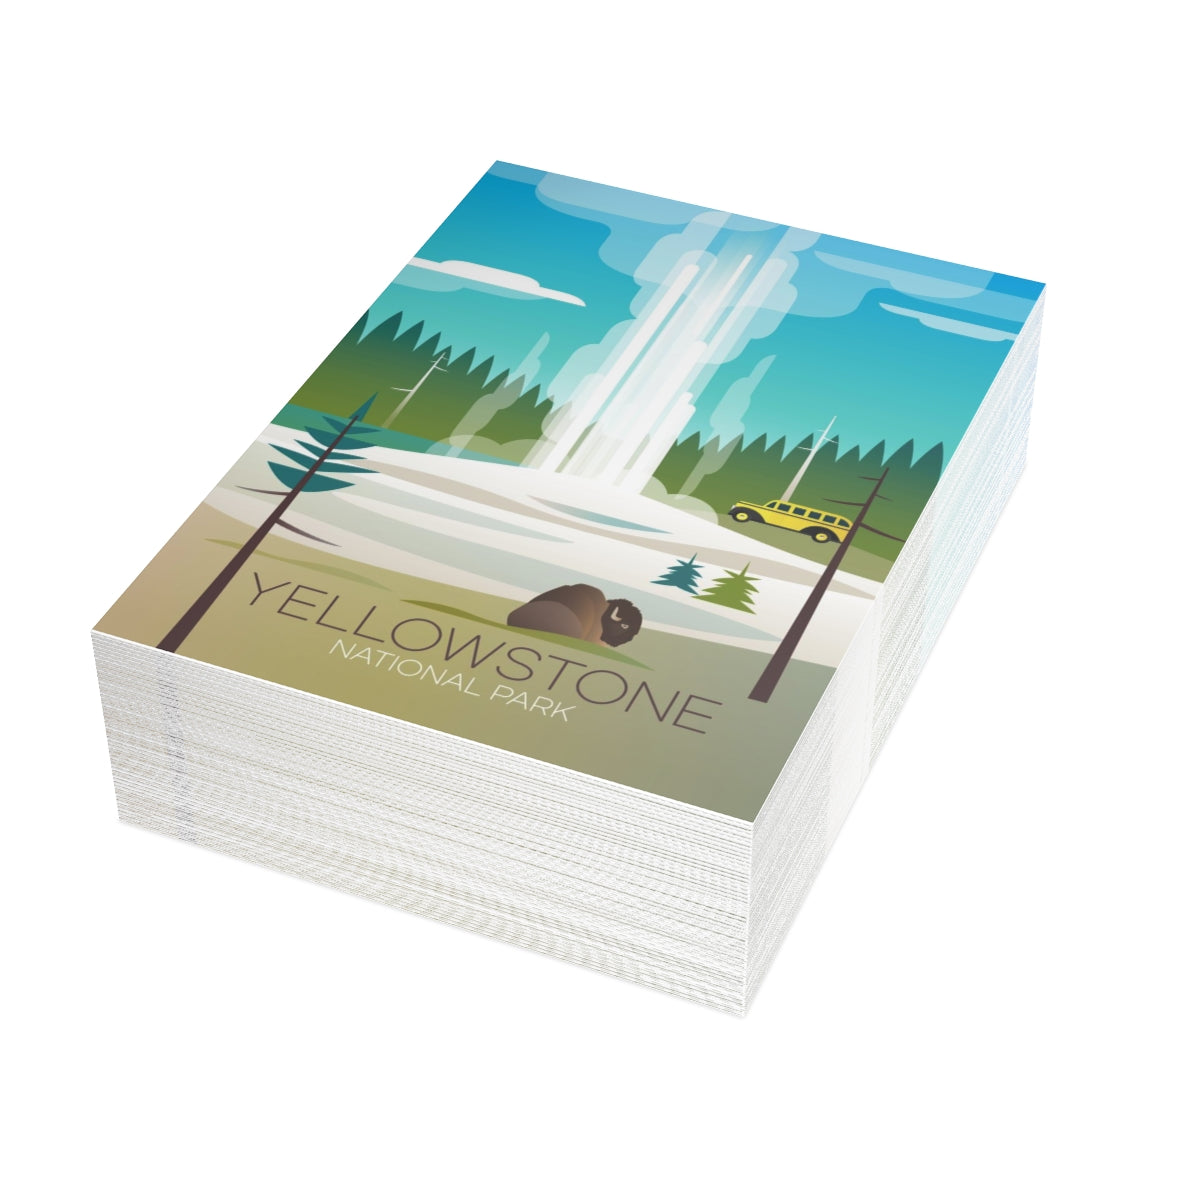 Yellowstone-Nationalpark, Old Faithful gefaltete matte Notizkarten + Umschläge (10 Stück) 